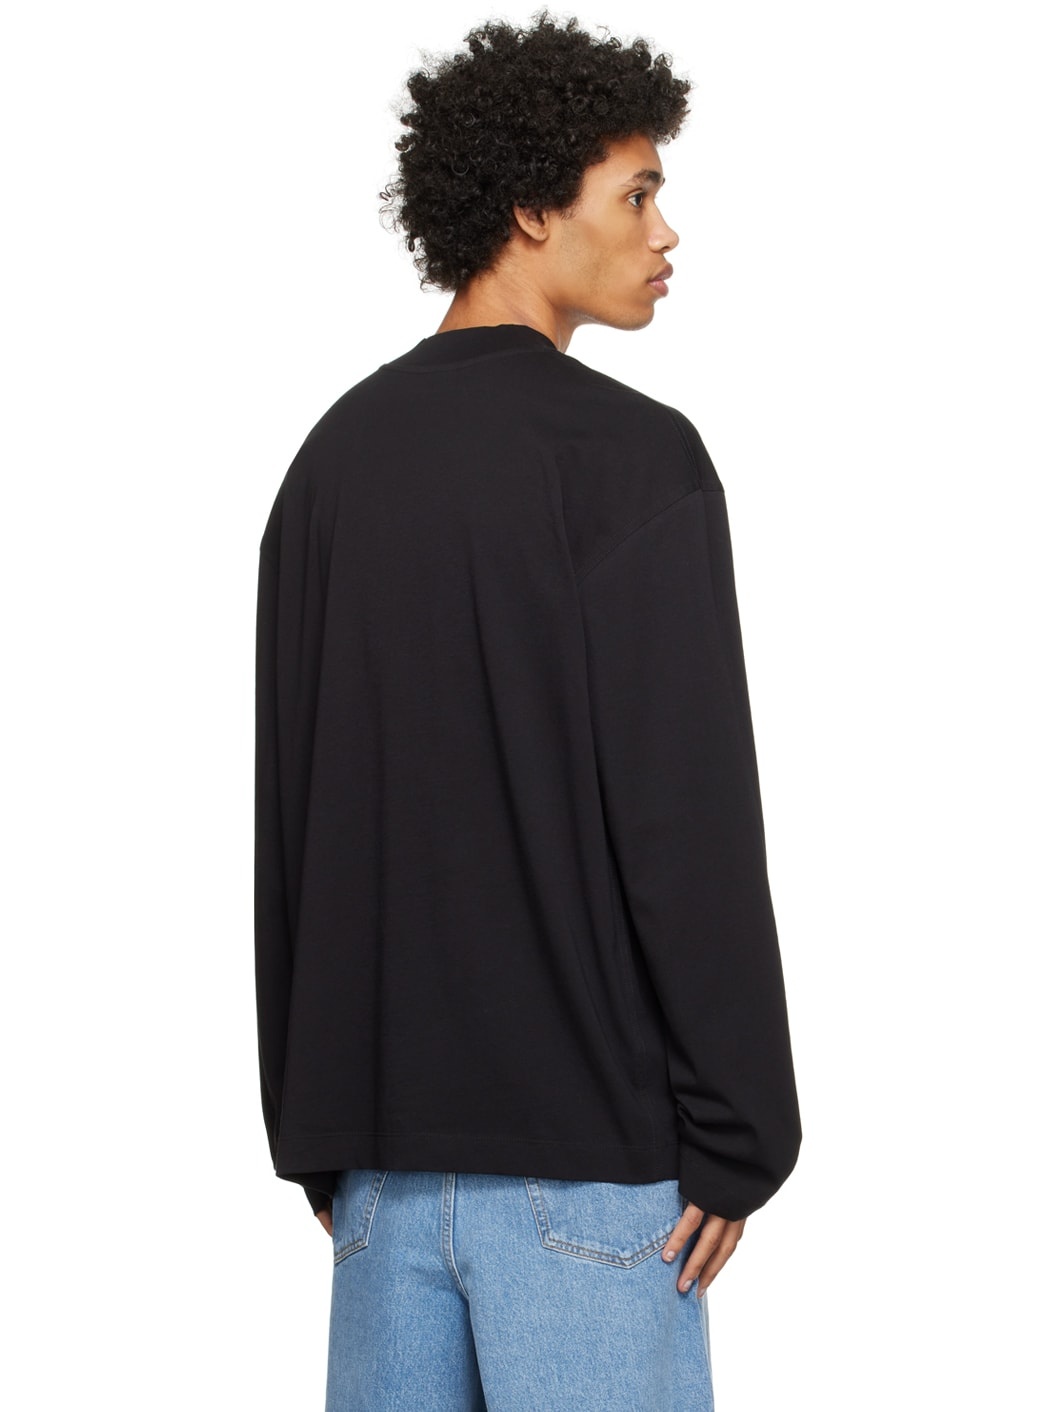 Black Mock Neck Sweater - 3